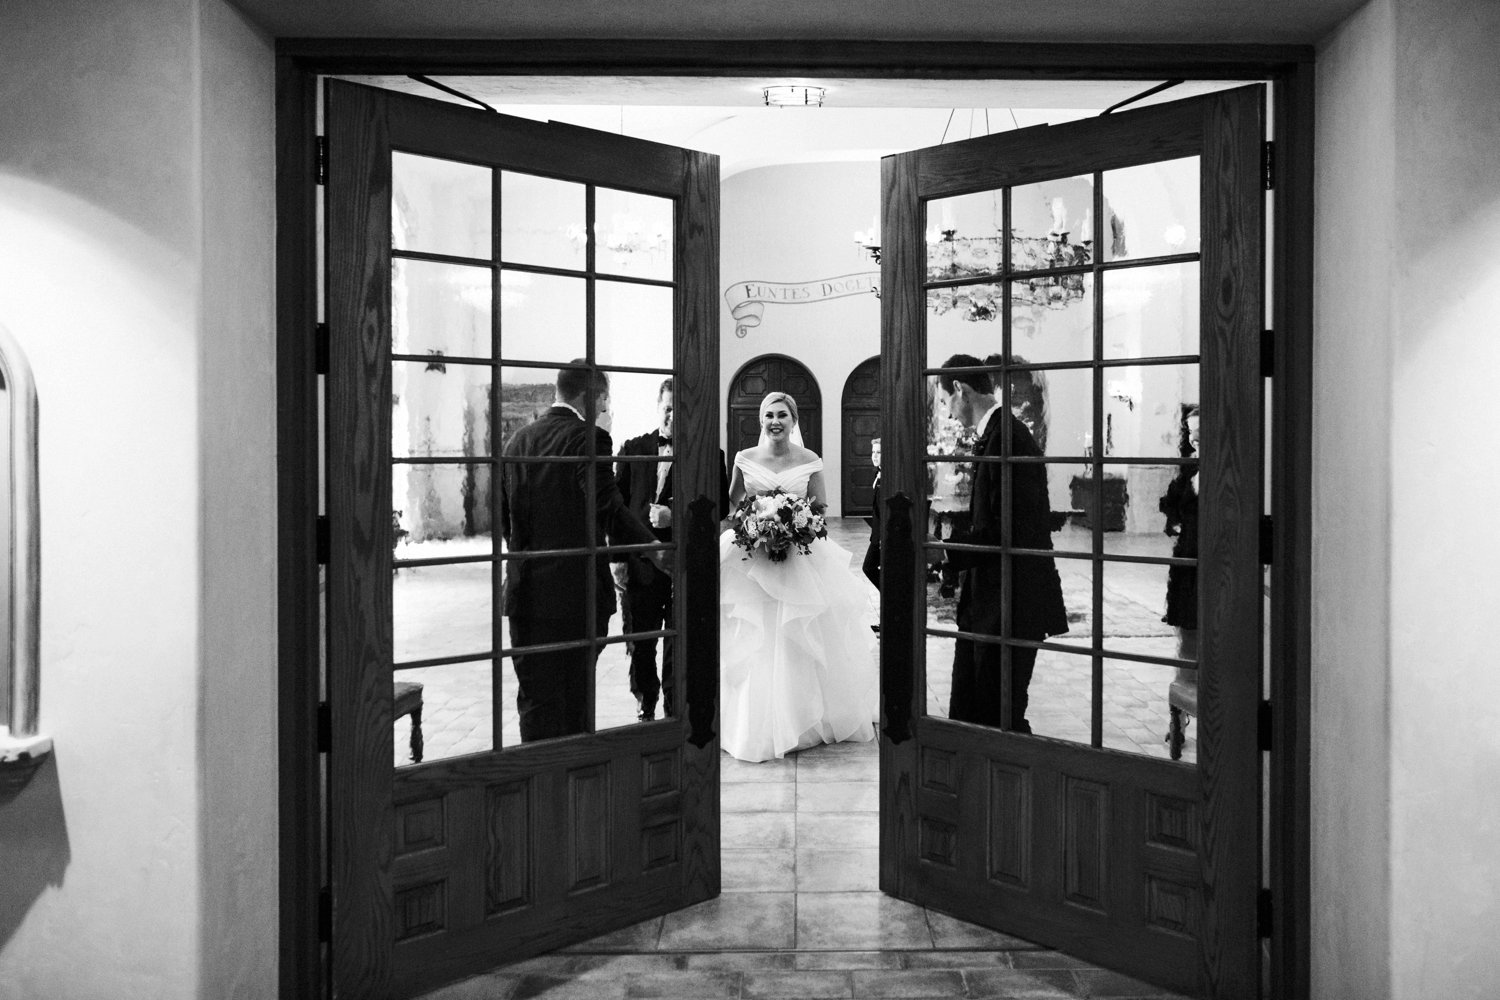  images by feliciathephotographer.com | destination wedding photographer | kansas city | summertime | classic | ceremony | father of the bride | black and white | walking down the aisle | visitation church | catholic | 